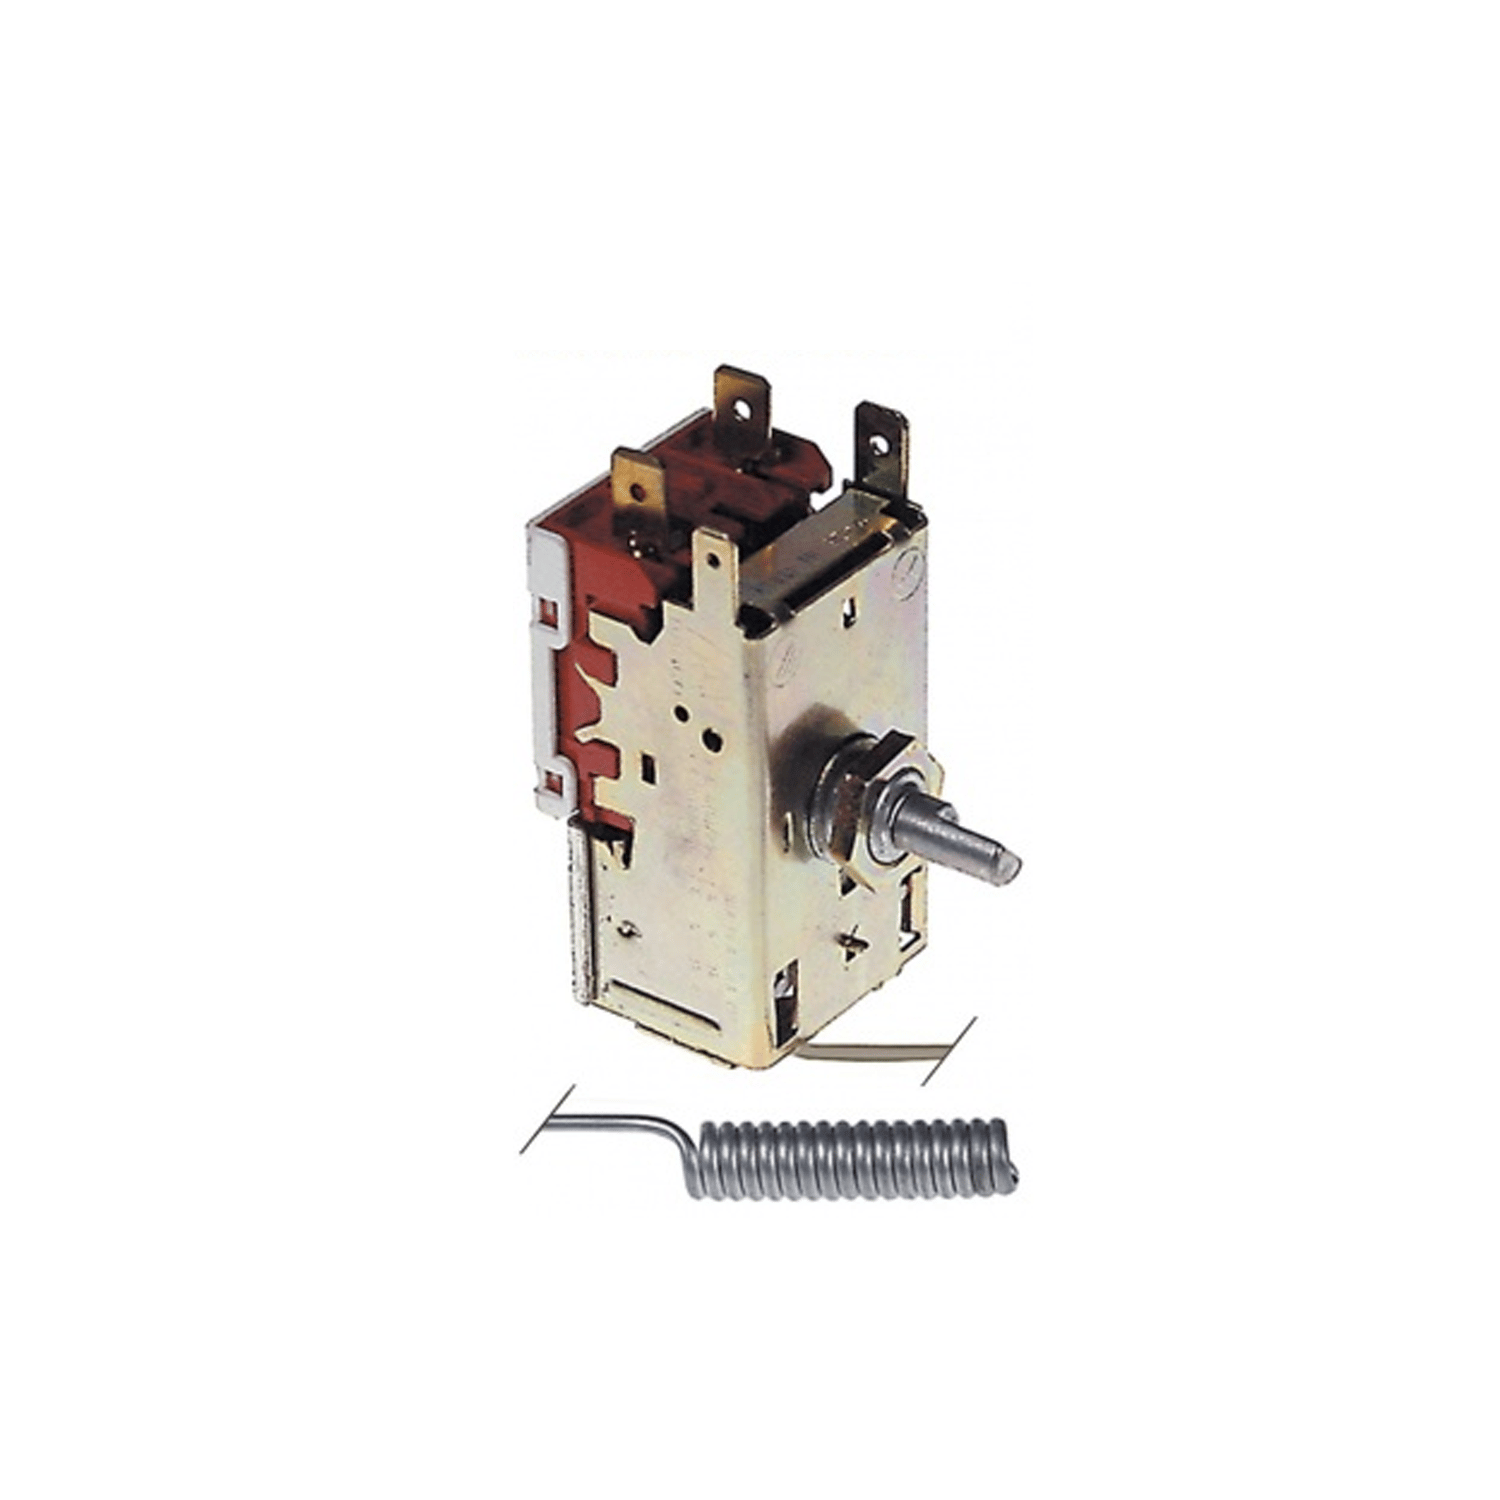 Thermostat RANCO K50-P1545 / 001 Probe ø 9mm Probe length 40mm Capillary tube 1250mm